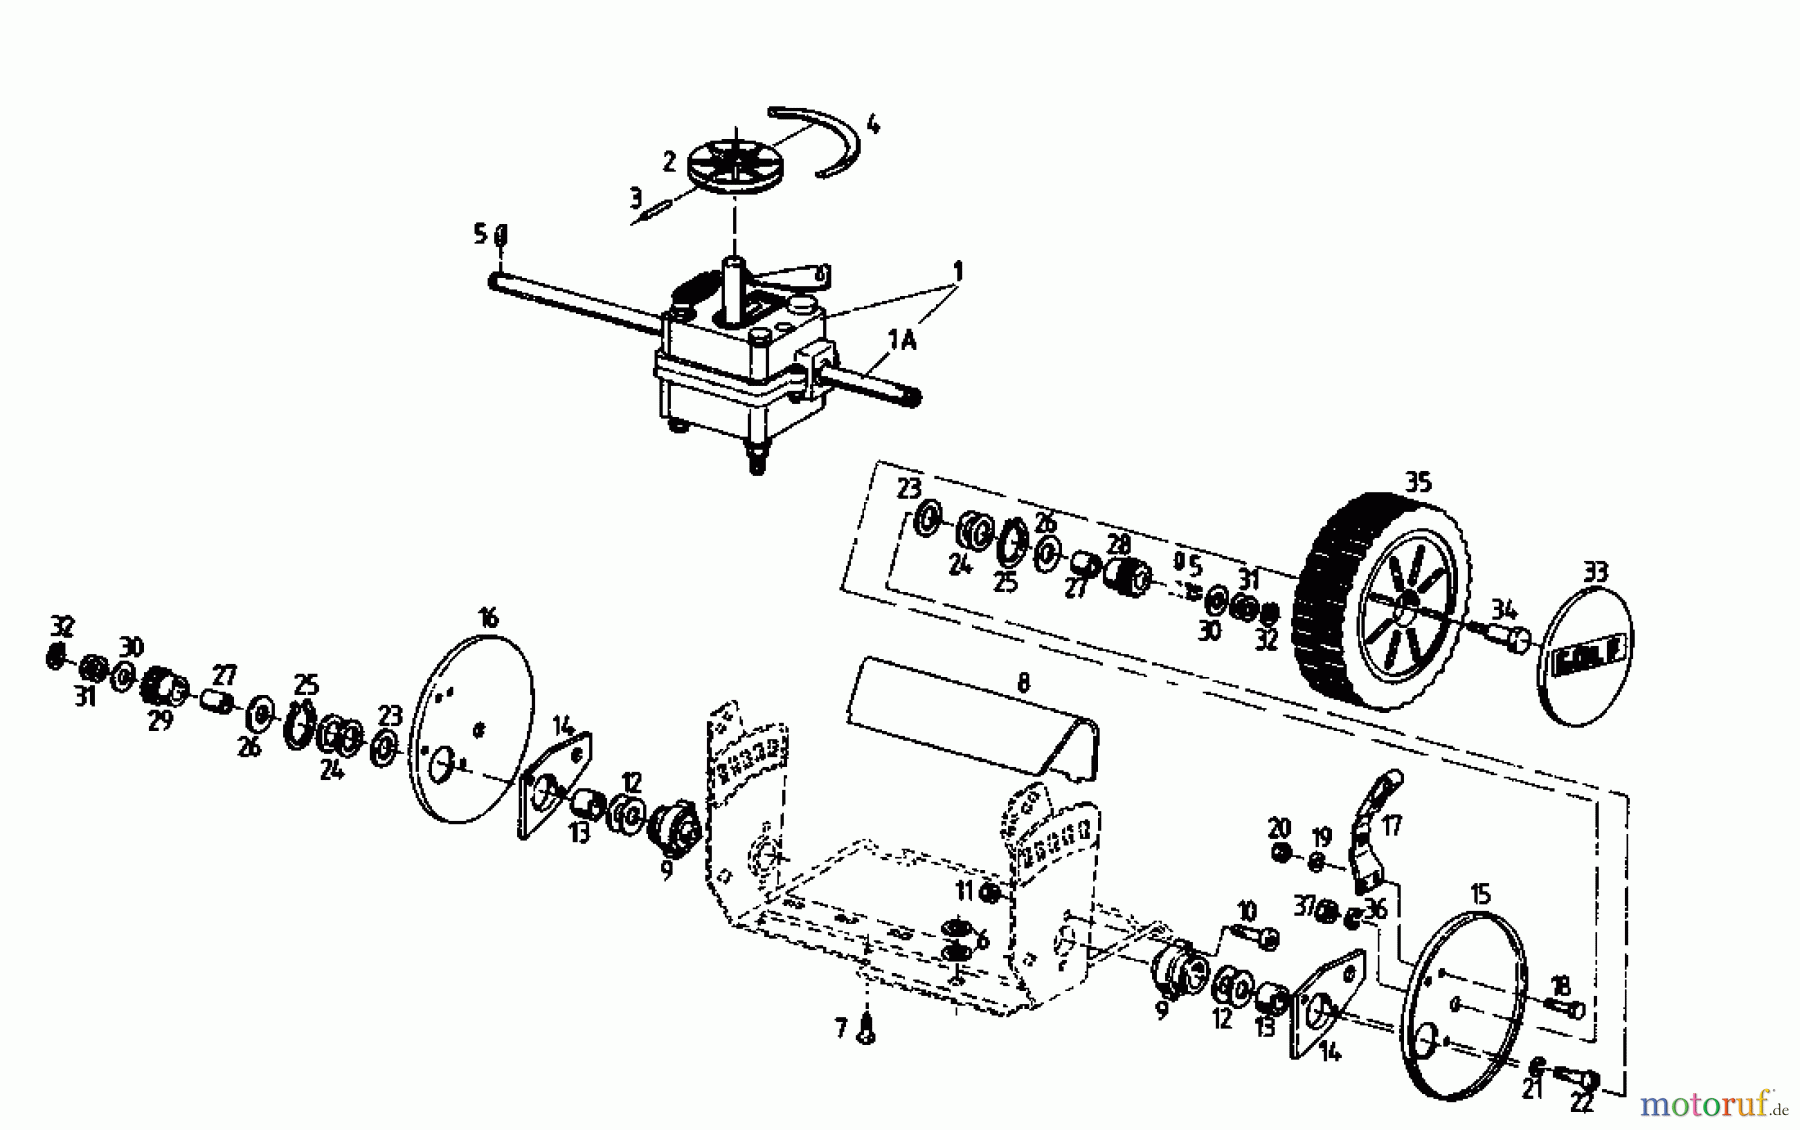  Golf Petrol mower self propelled Golf BRL 04033.01  (1996) Gearbox, Wheels, Cutting hight adjustment